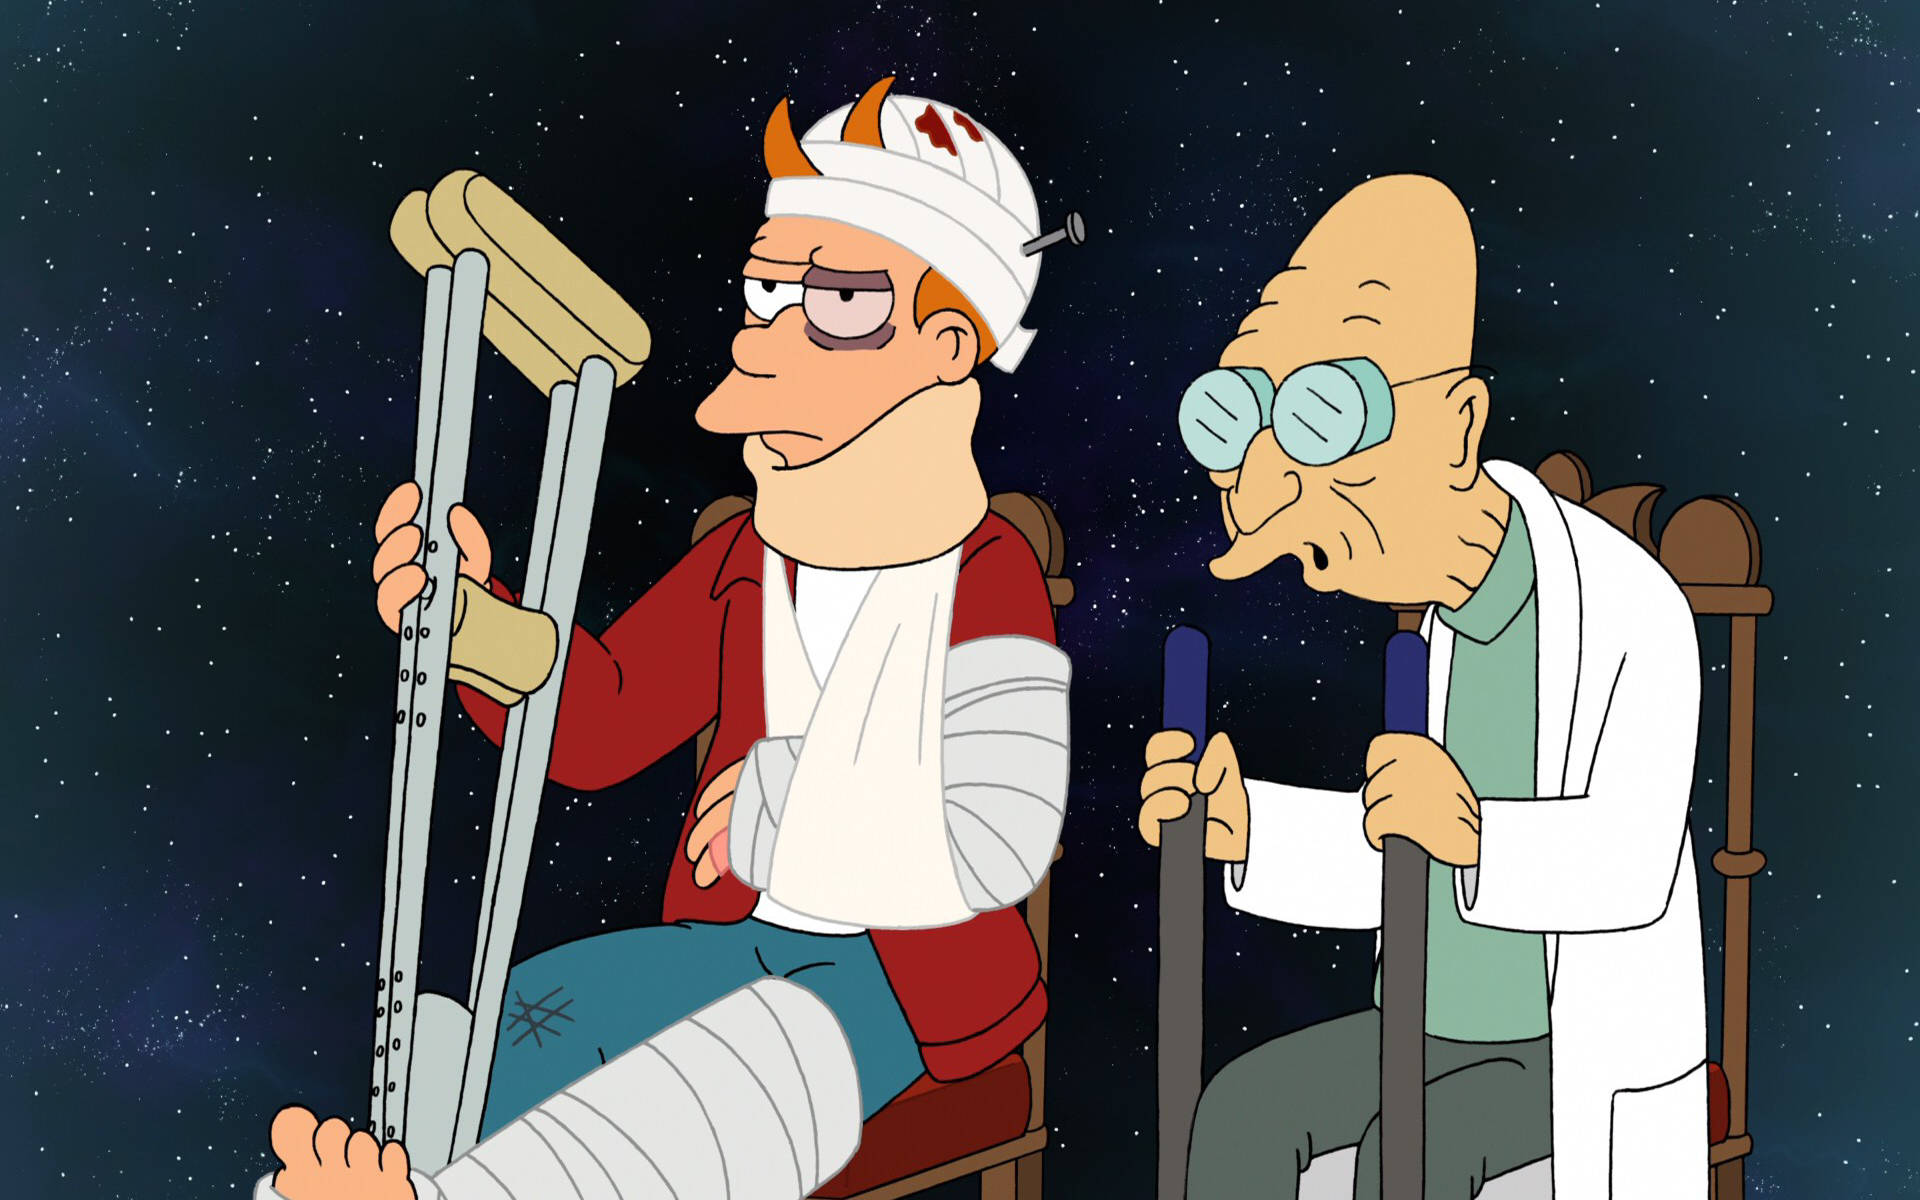 Caption: Futurama's Main Characters In Space Adventure